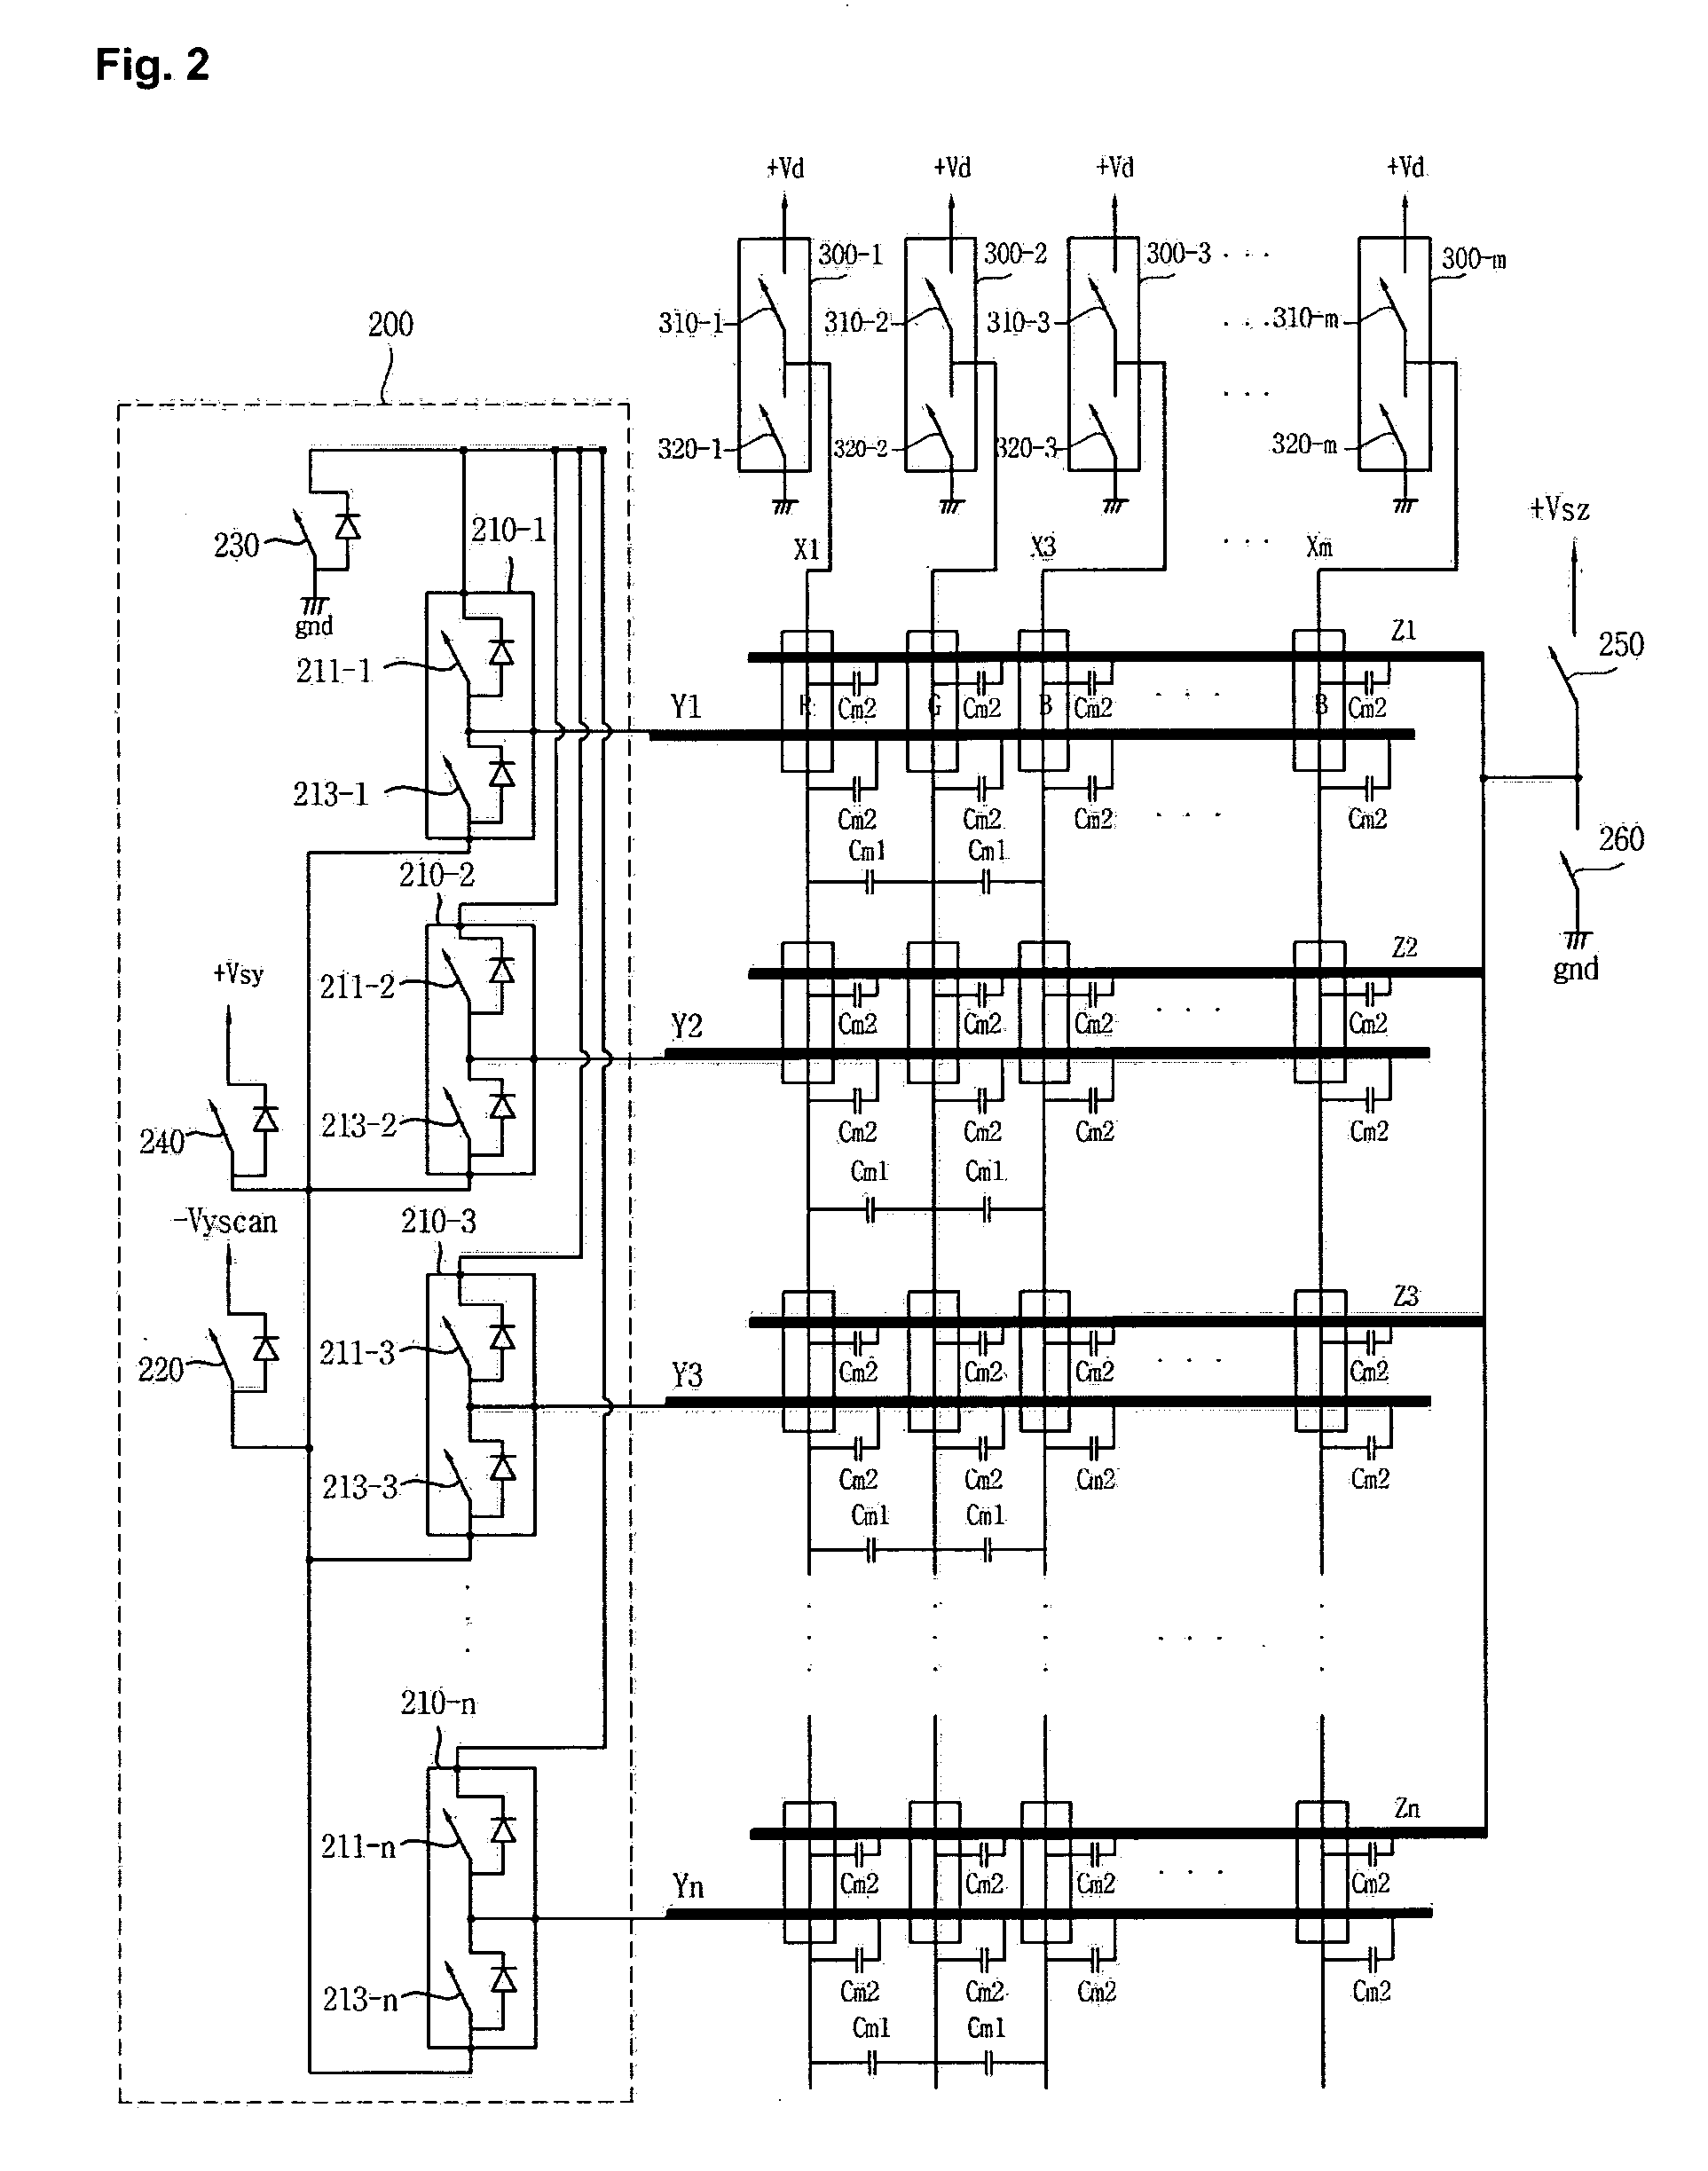 Apparatus and method for driving plasma display panel